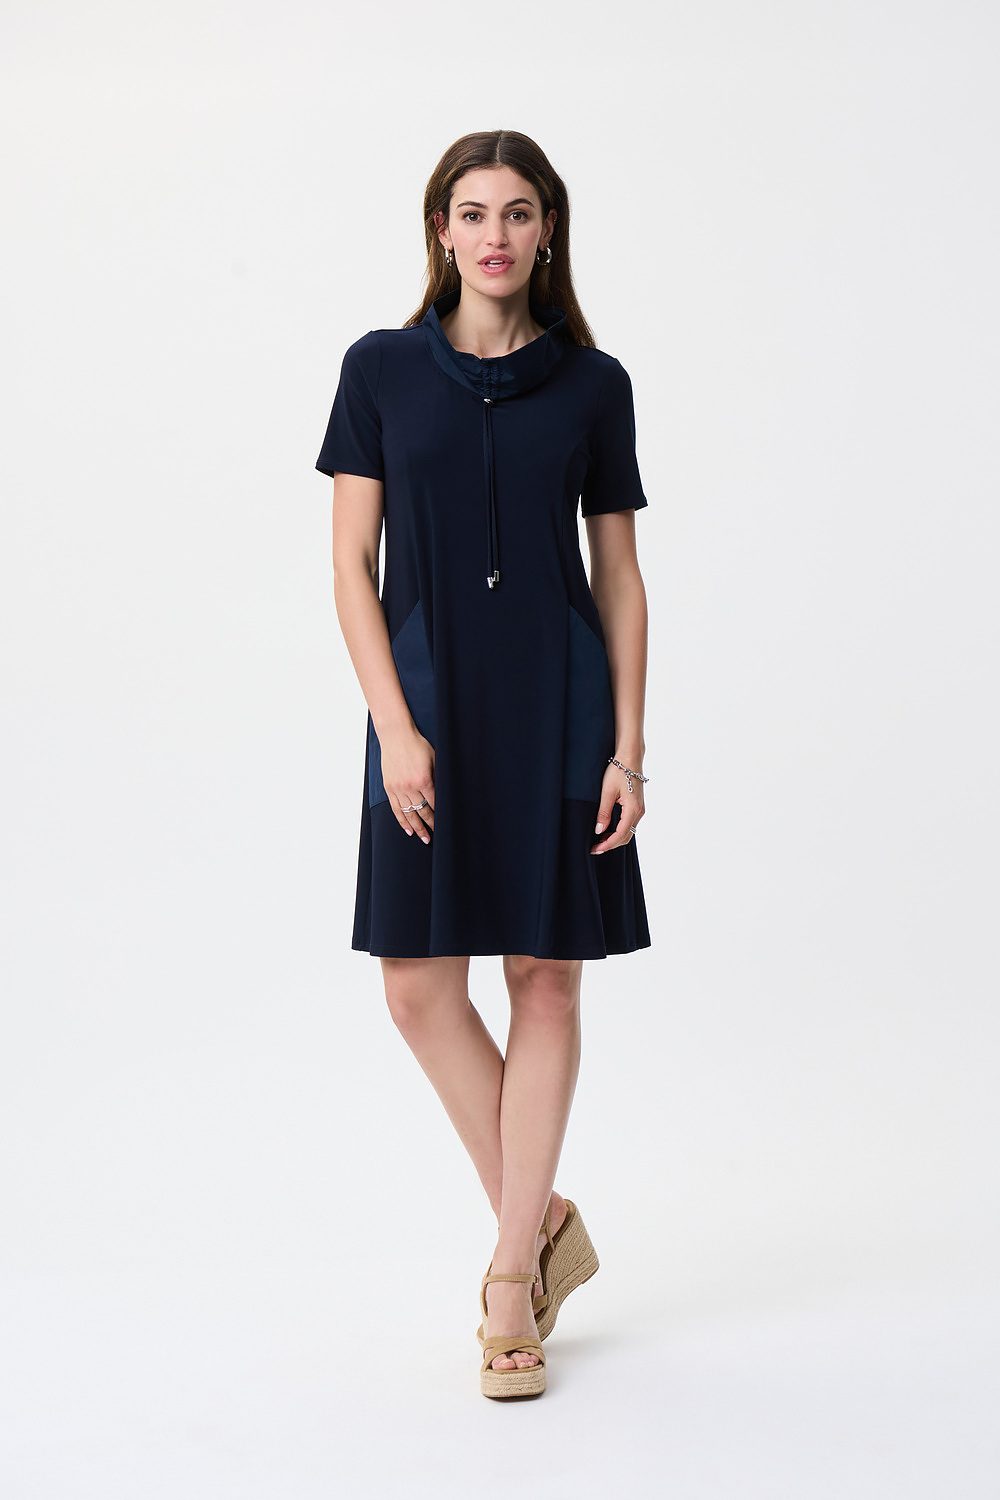 Drawstring Shirt Dress Style 231141. Midnight Blue